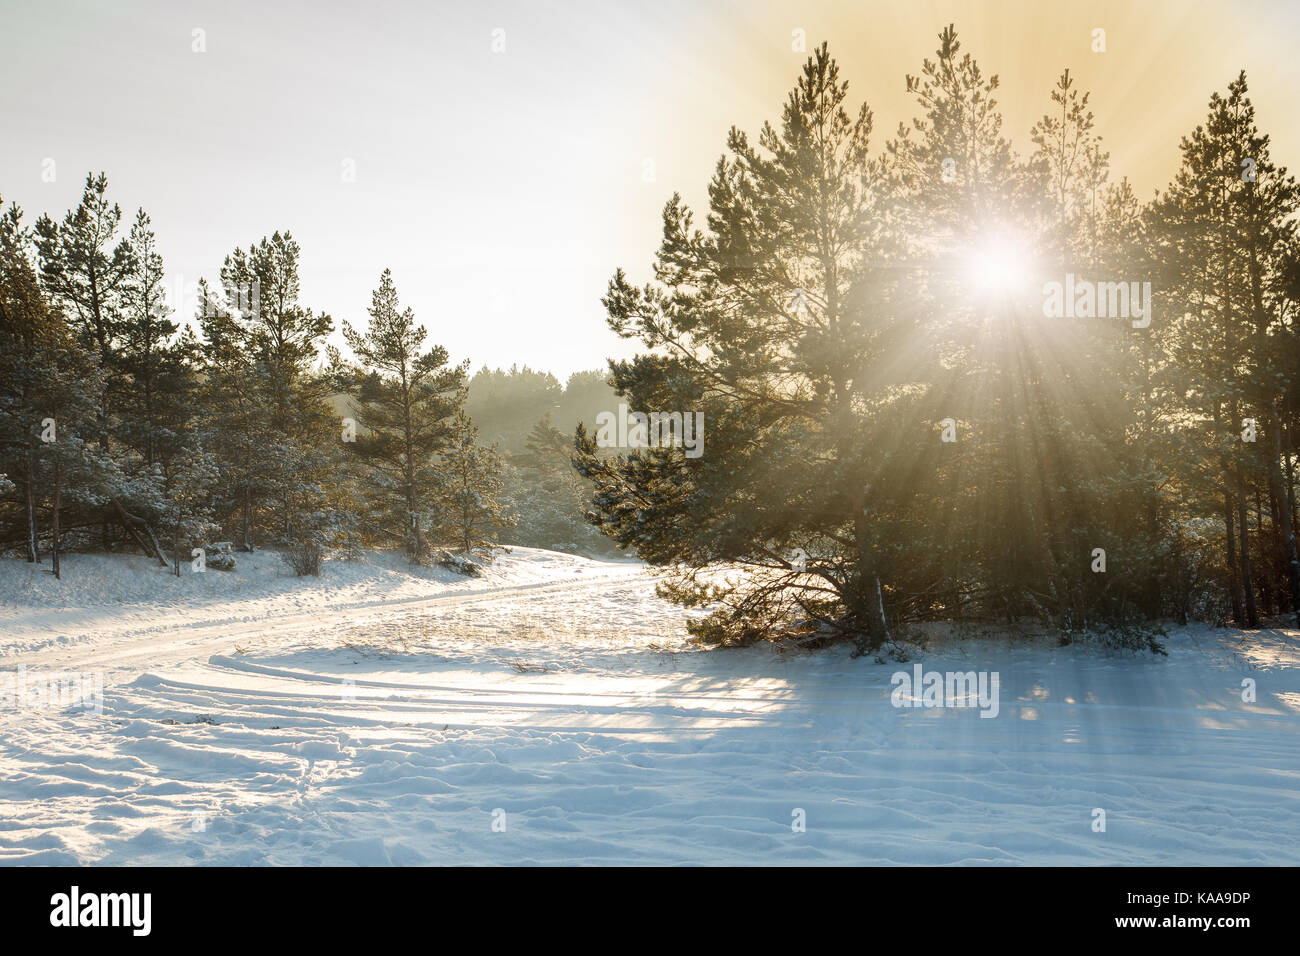 Snowy forest scene Stock Photo